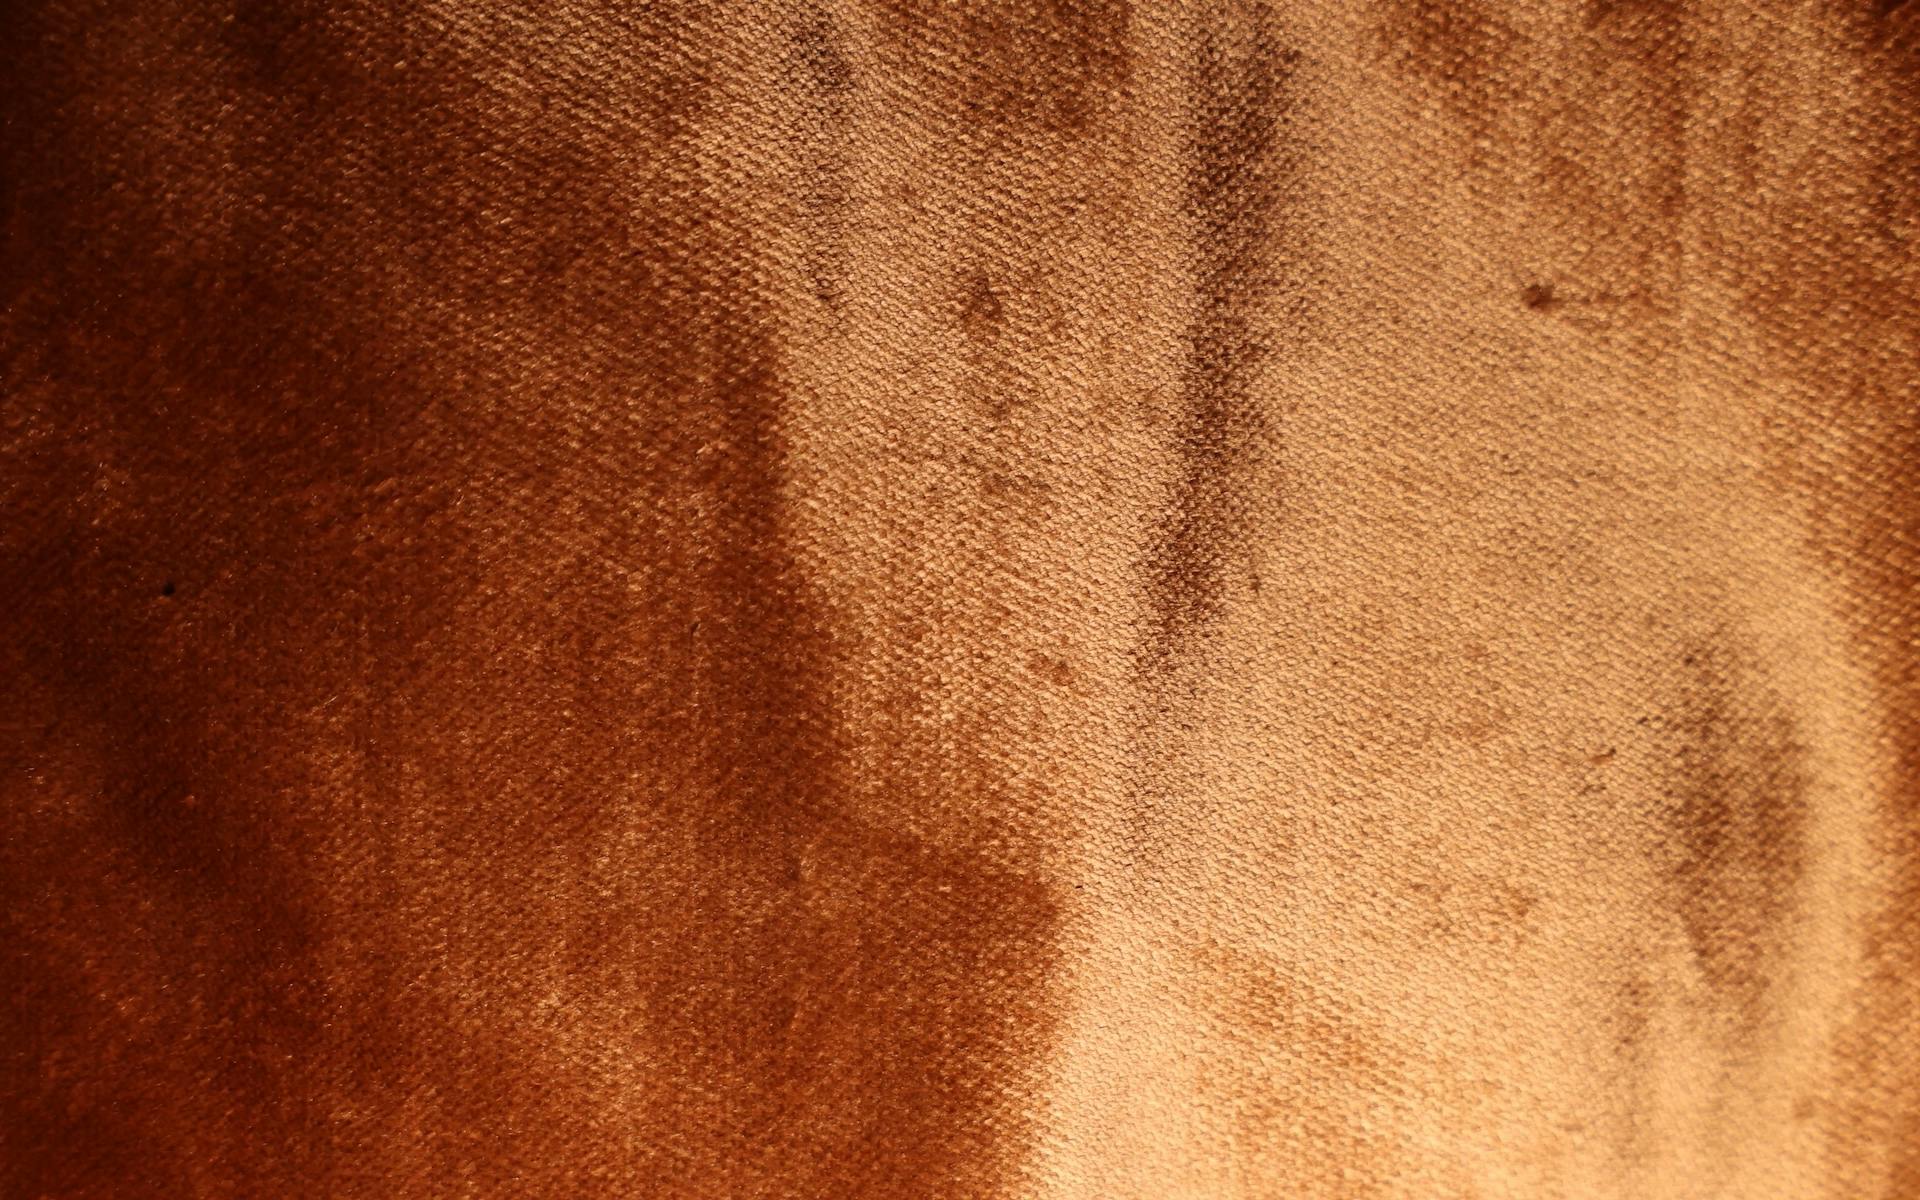 Textured fabric background image